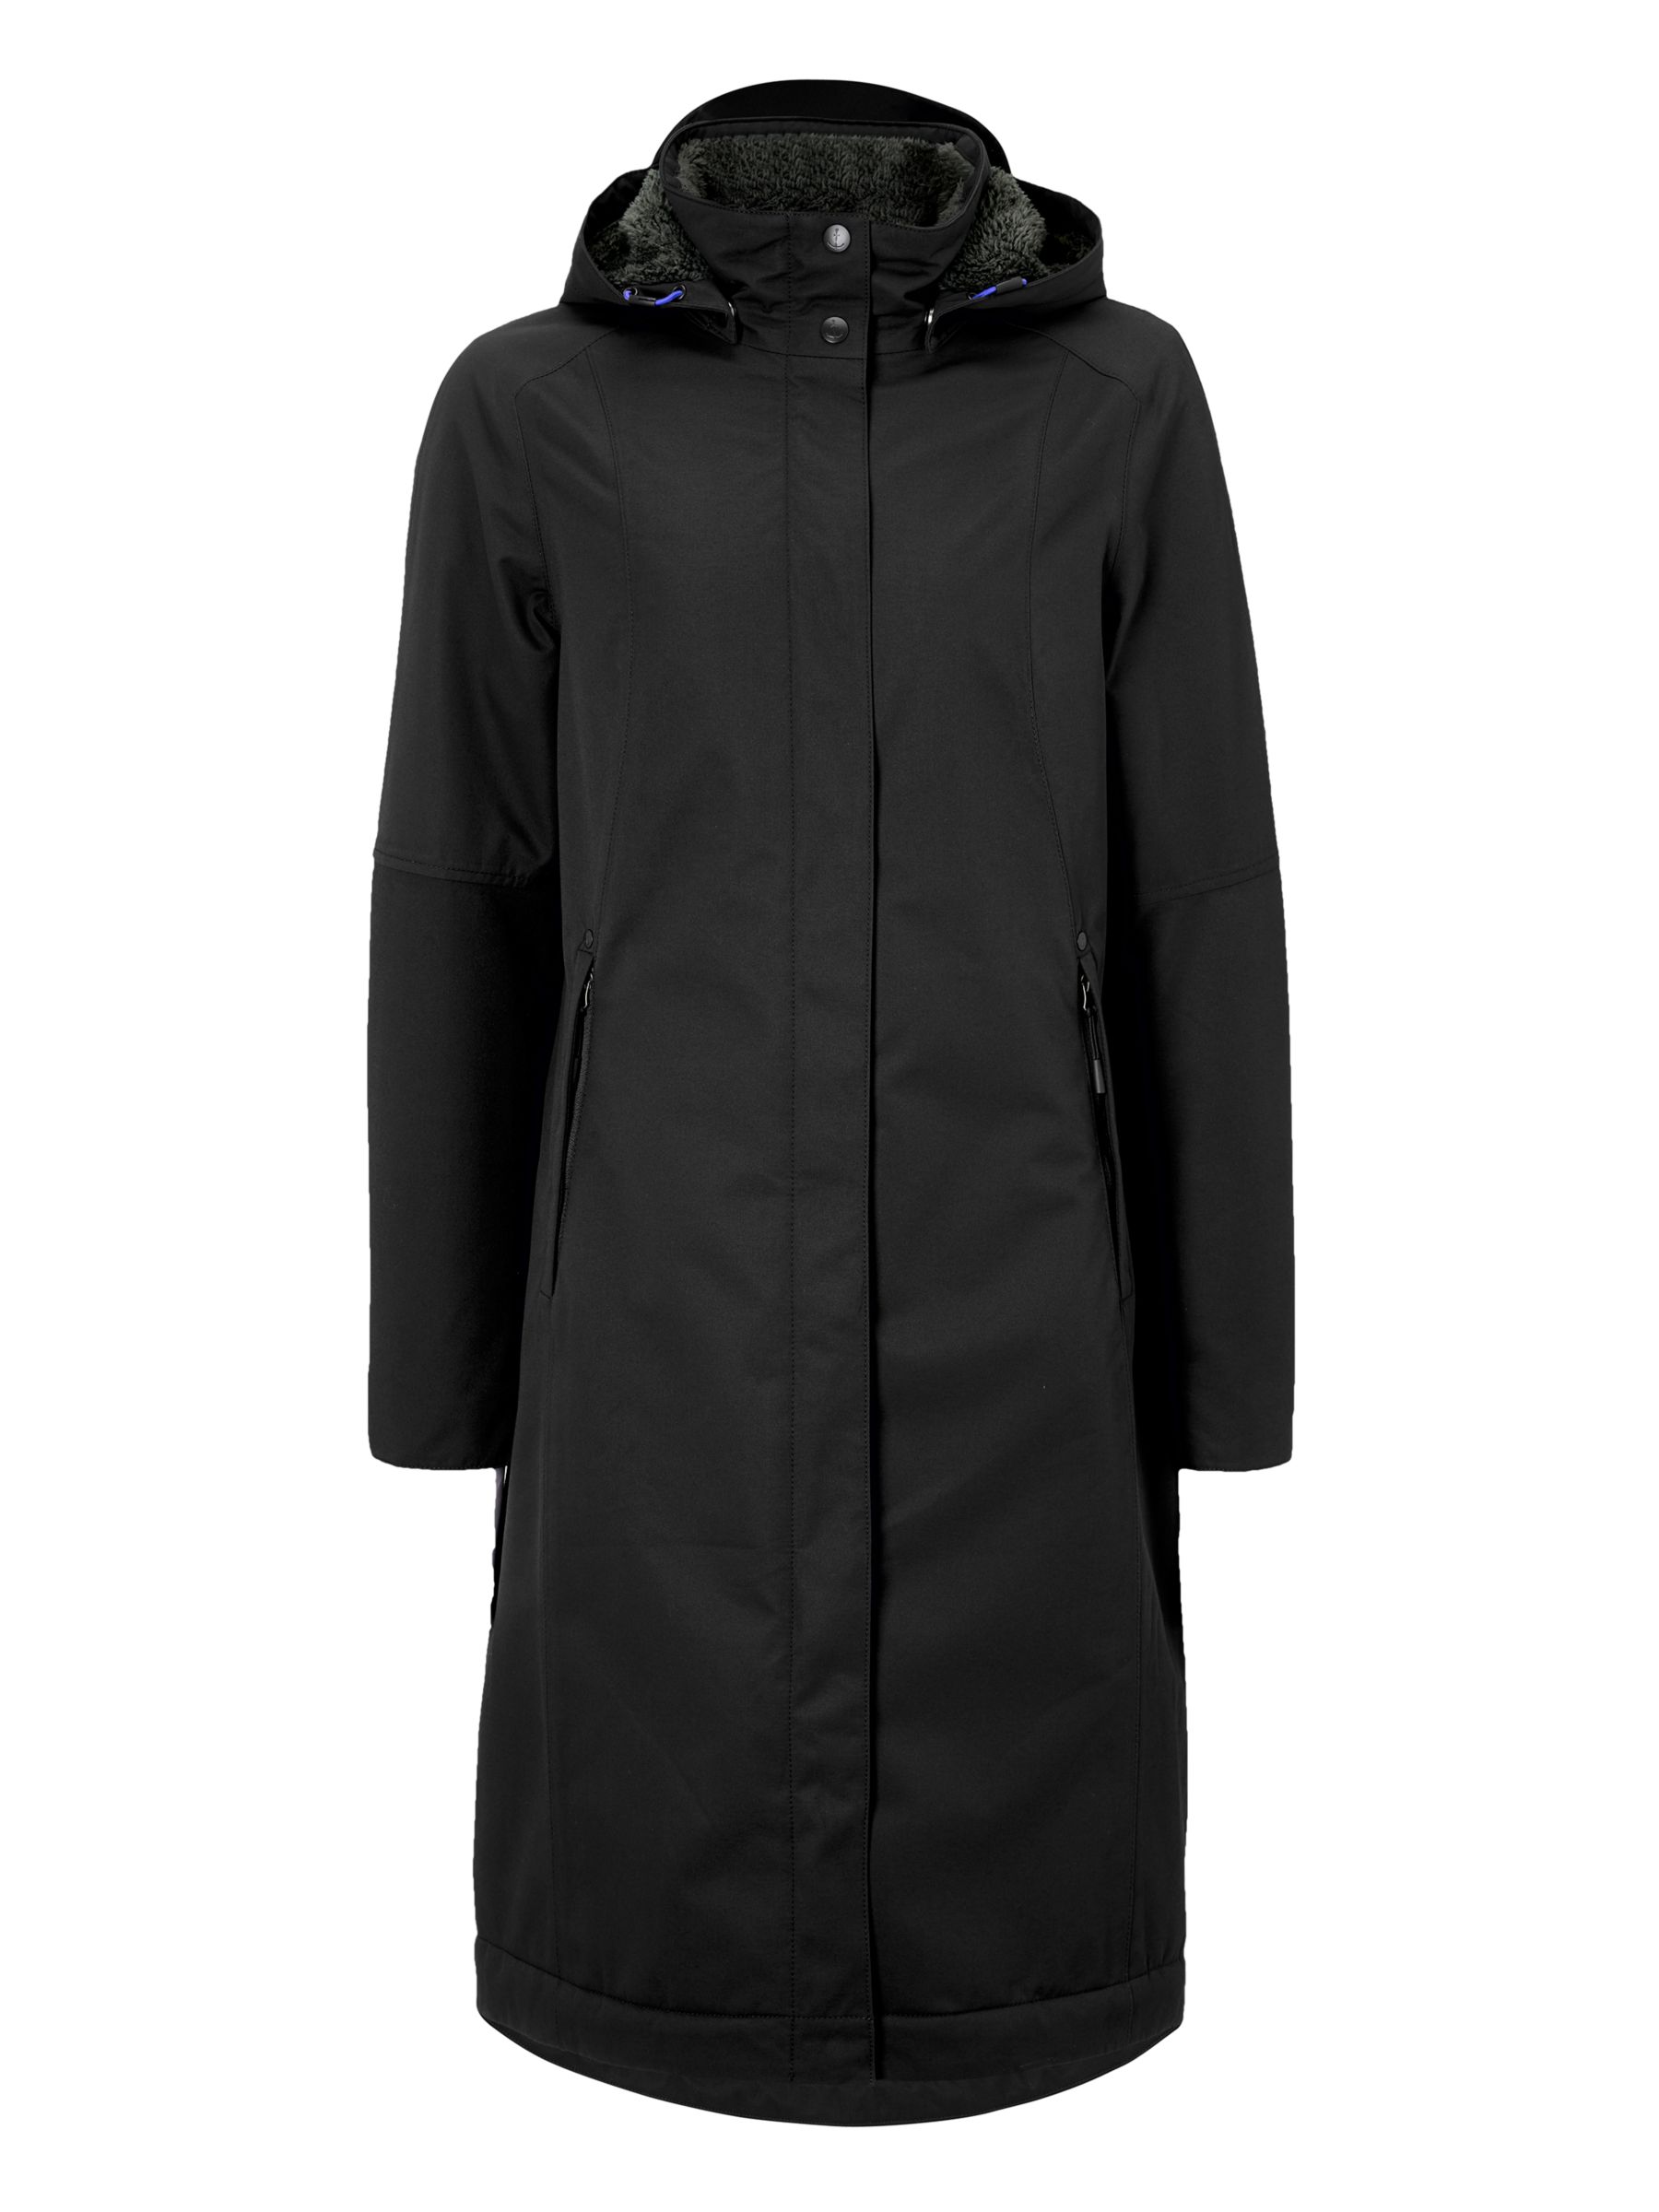 Seasalt RAIN® Collection Janelle Waterproof Coat at John Lewis & Partners